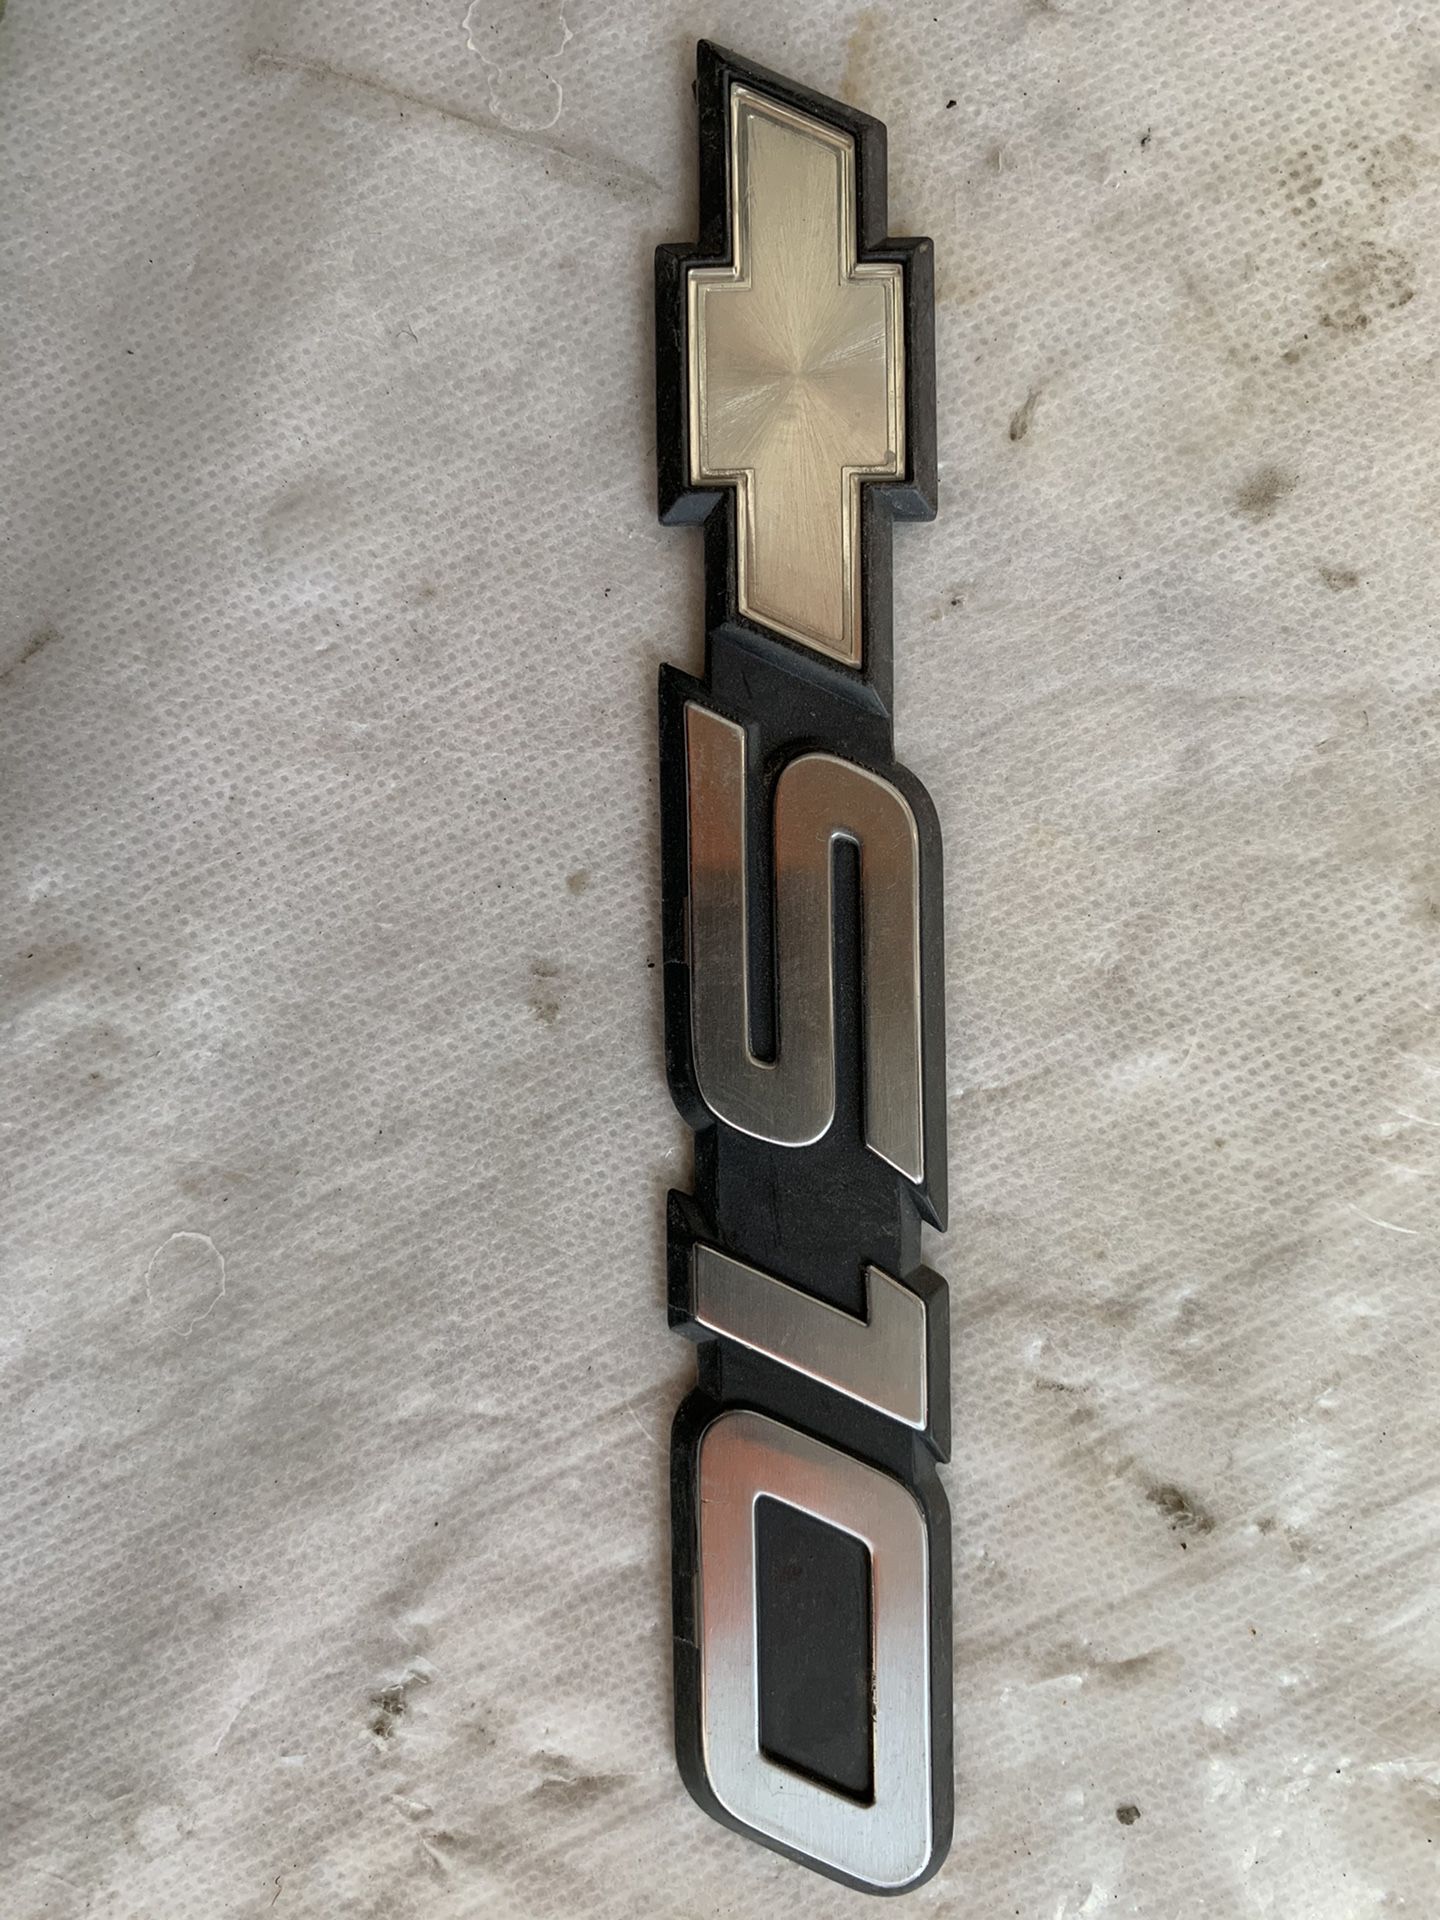 Chevy S10 Emblem